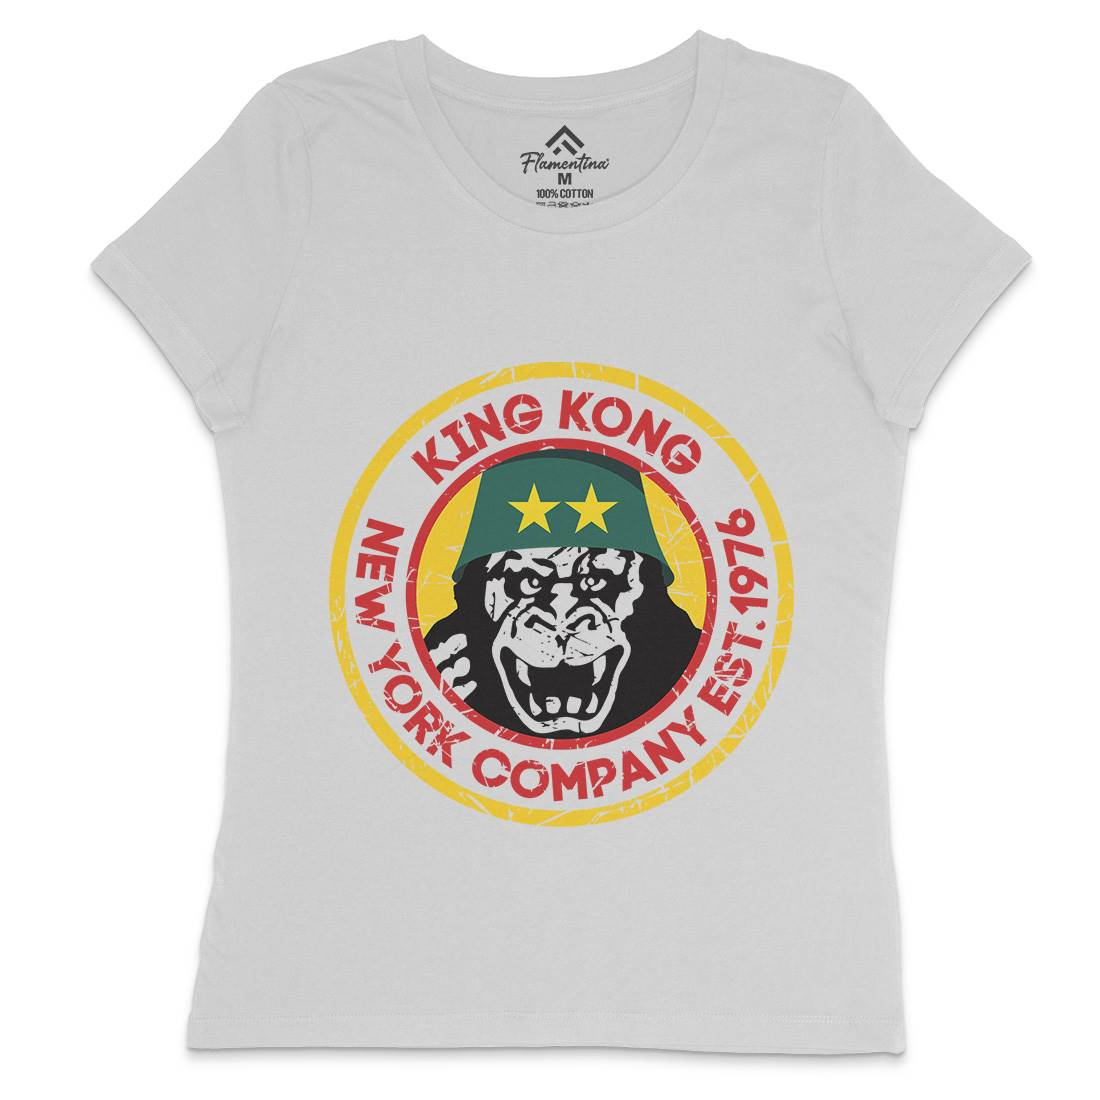 King Kong Company Womens Crew Neck T-Shirt Retro D362